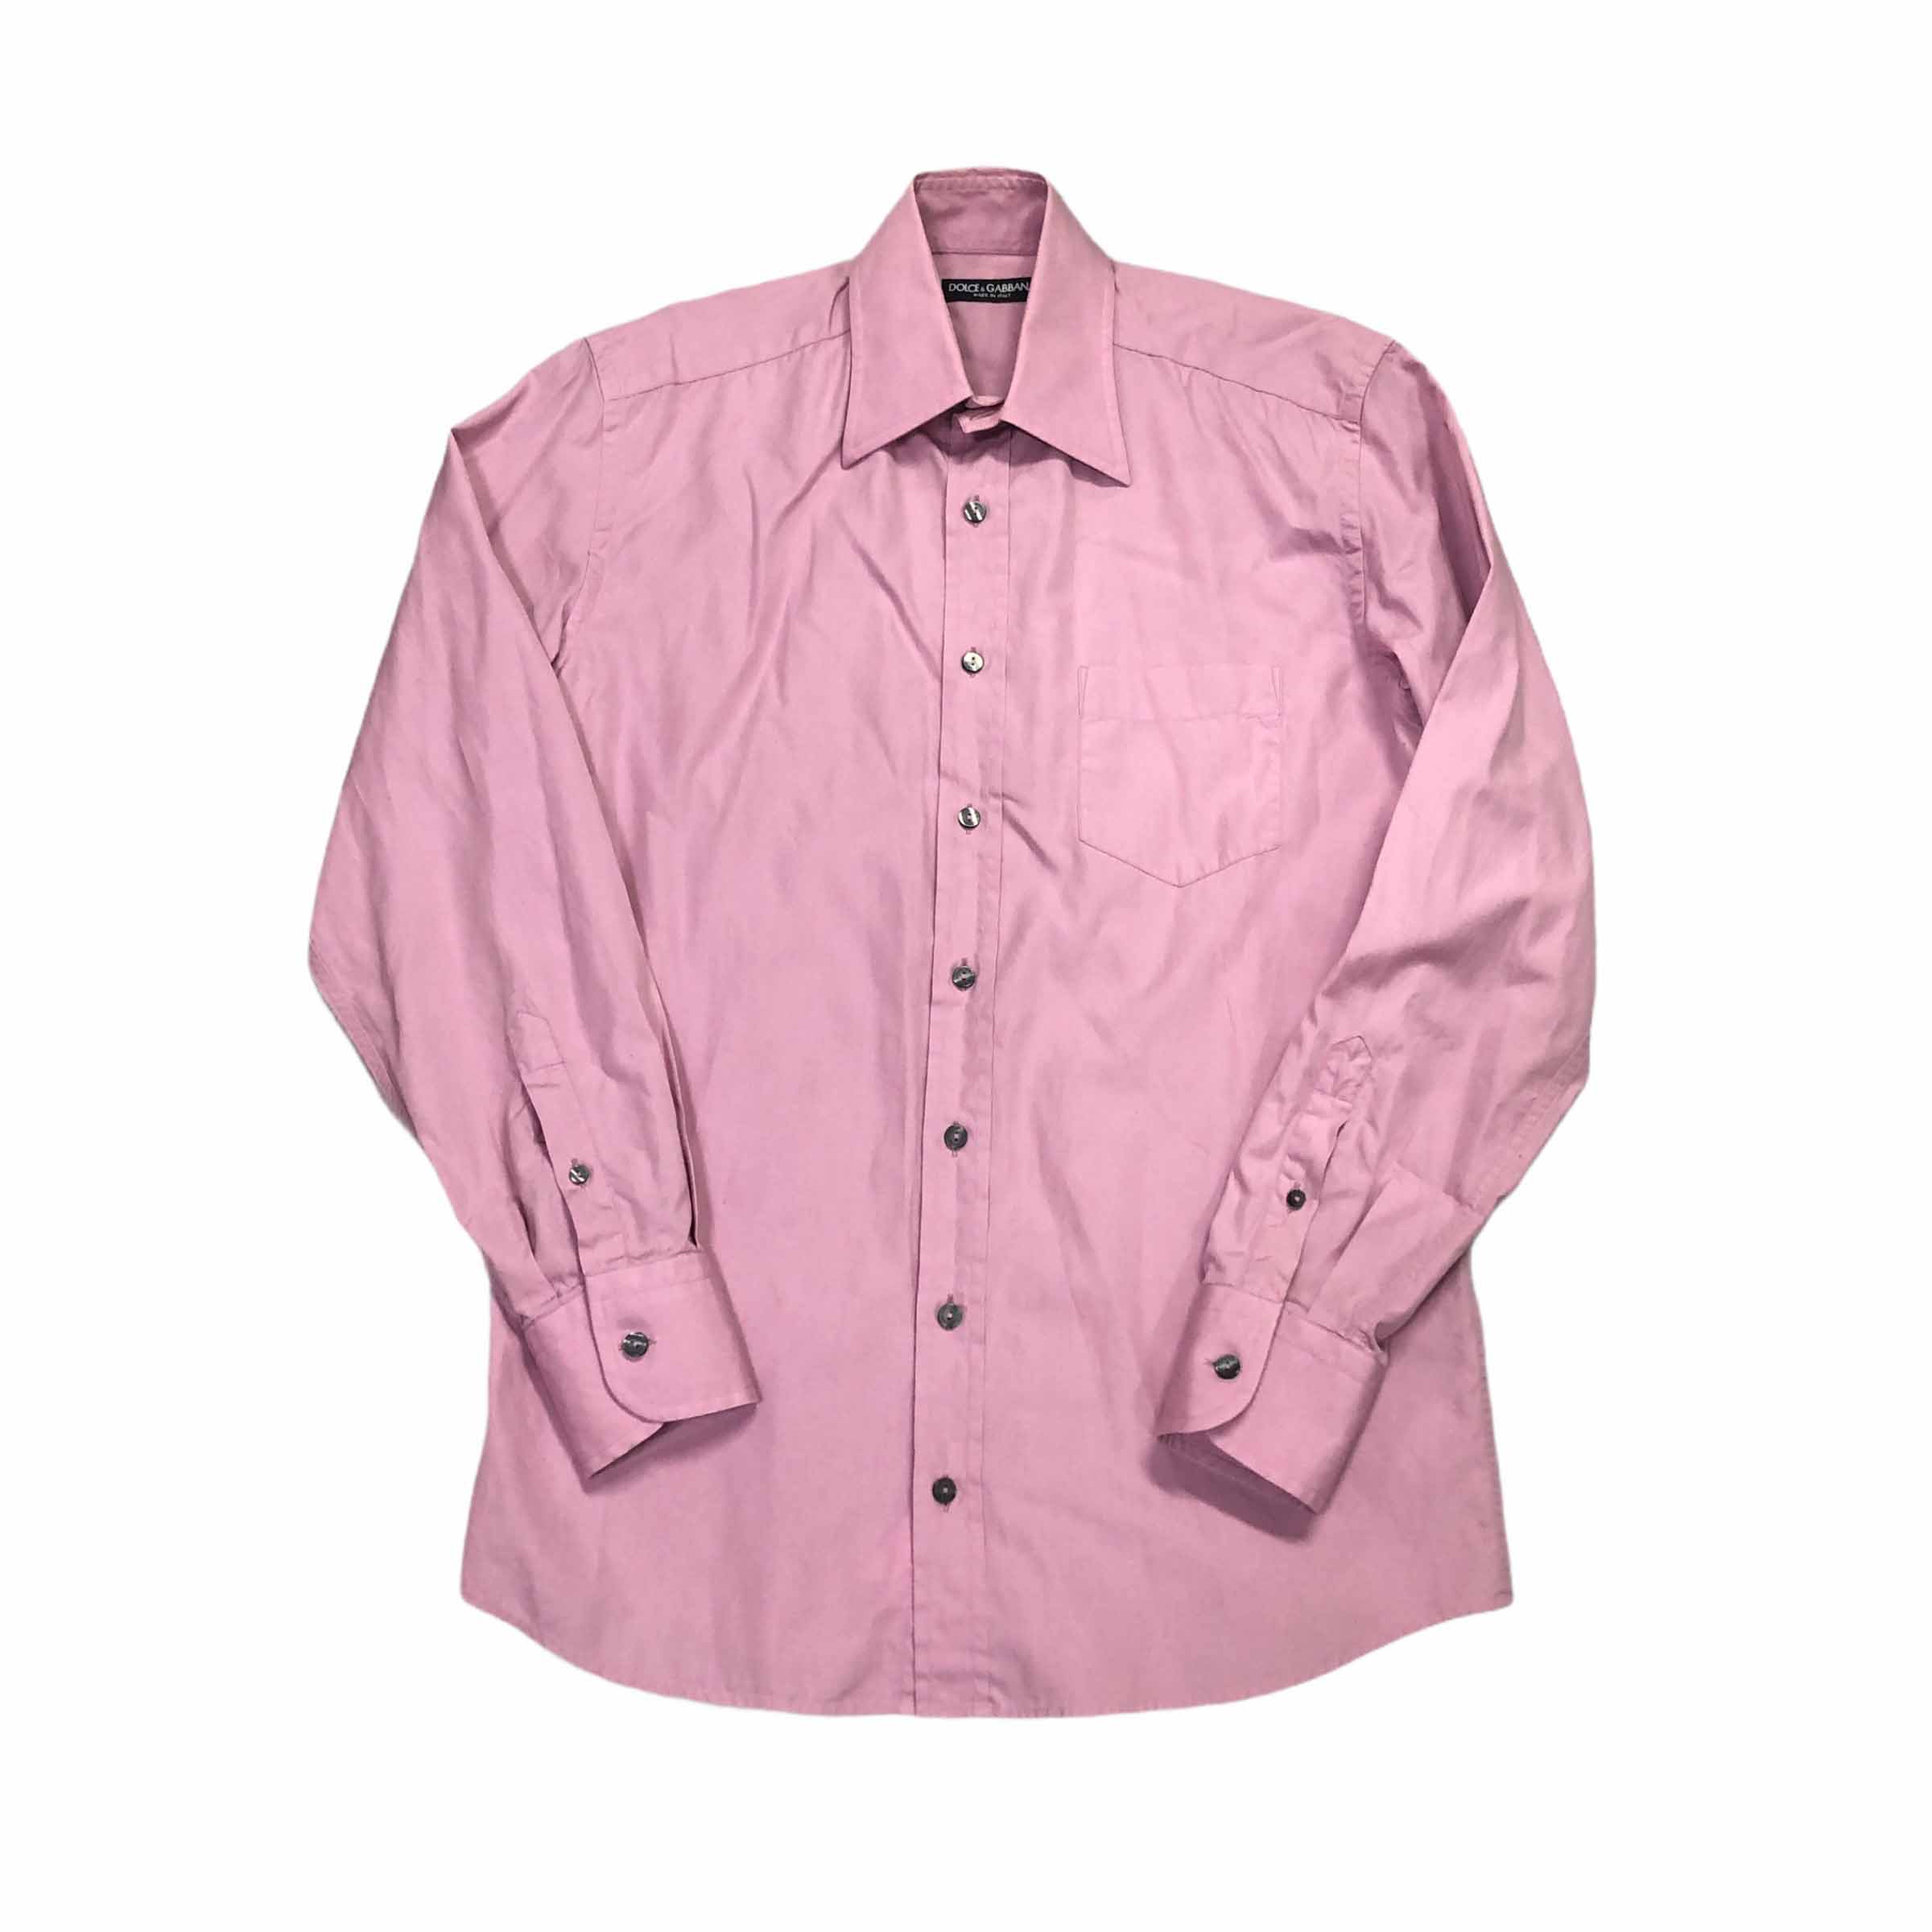 [D&amp;G] Pink Dress Shirts - Size 39